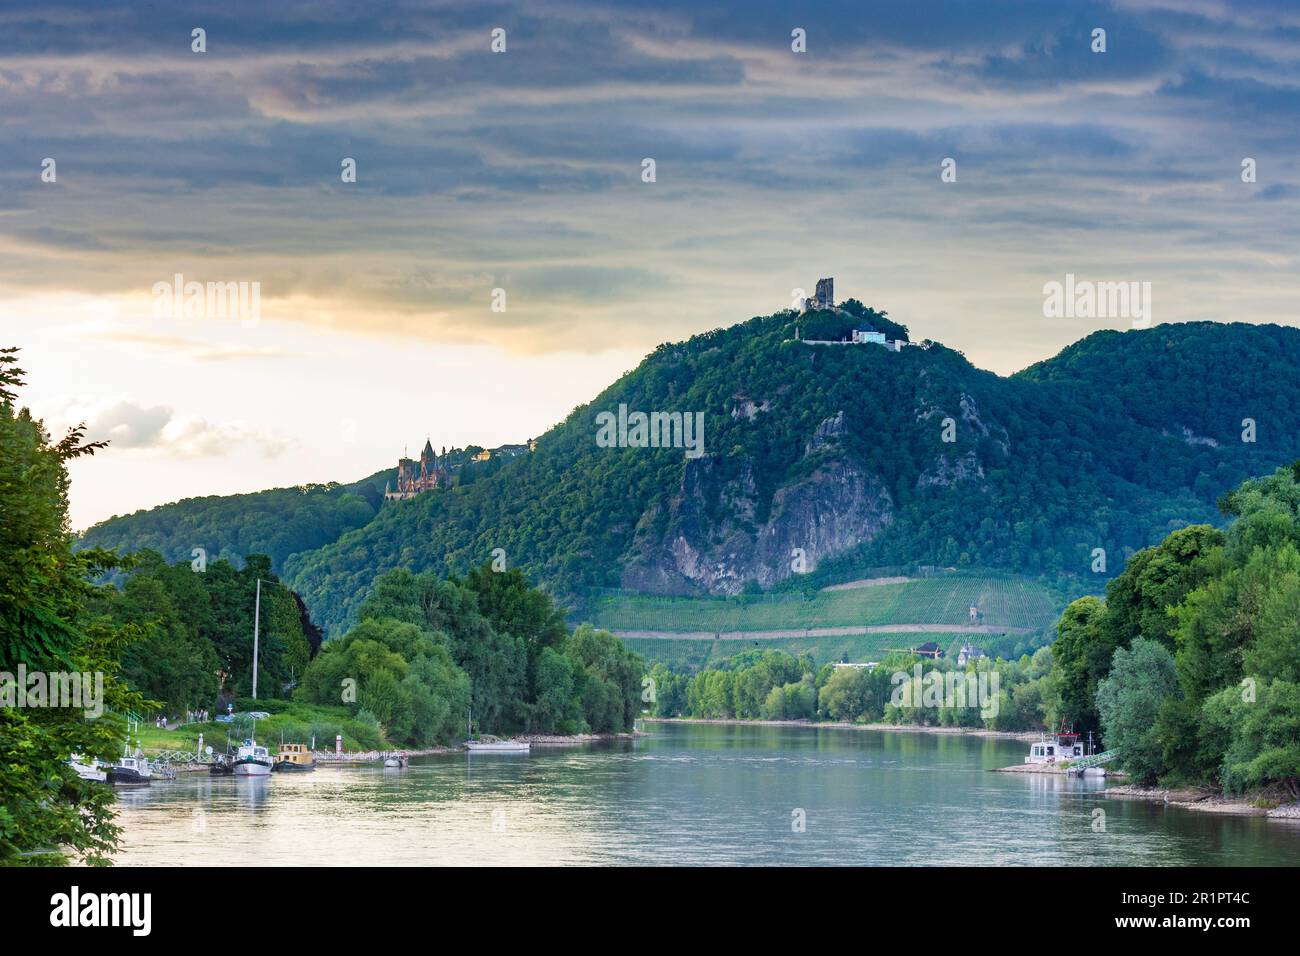 Königswinter, hill Drachenfels in mountain Siebengebirge with Schloss Drachenburg (left) and Drachenfels Castle (right), river Rhein (Rhine) in Rhein-Sieg-Region, North Rhine-Westphalia, Germany Stock Photo